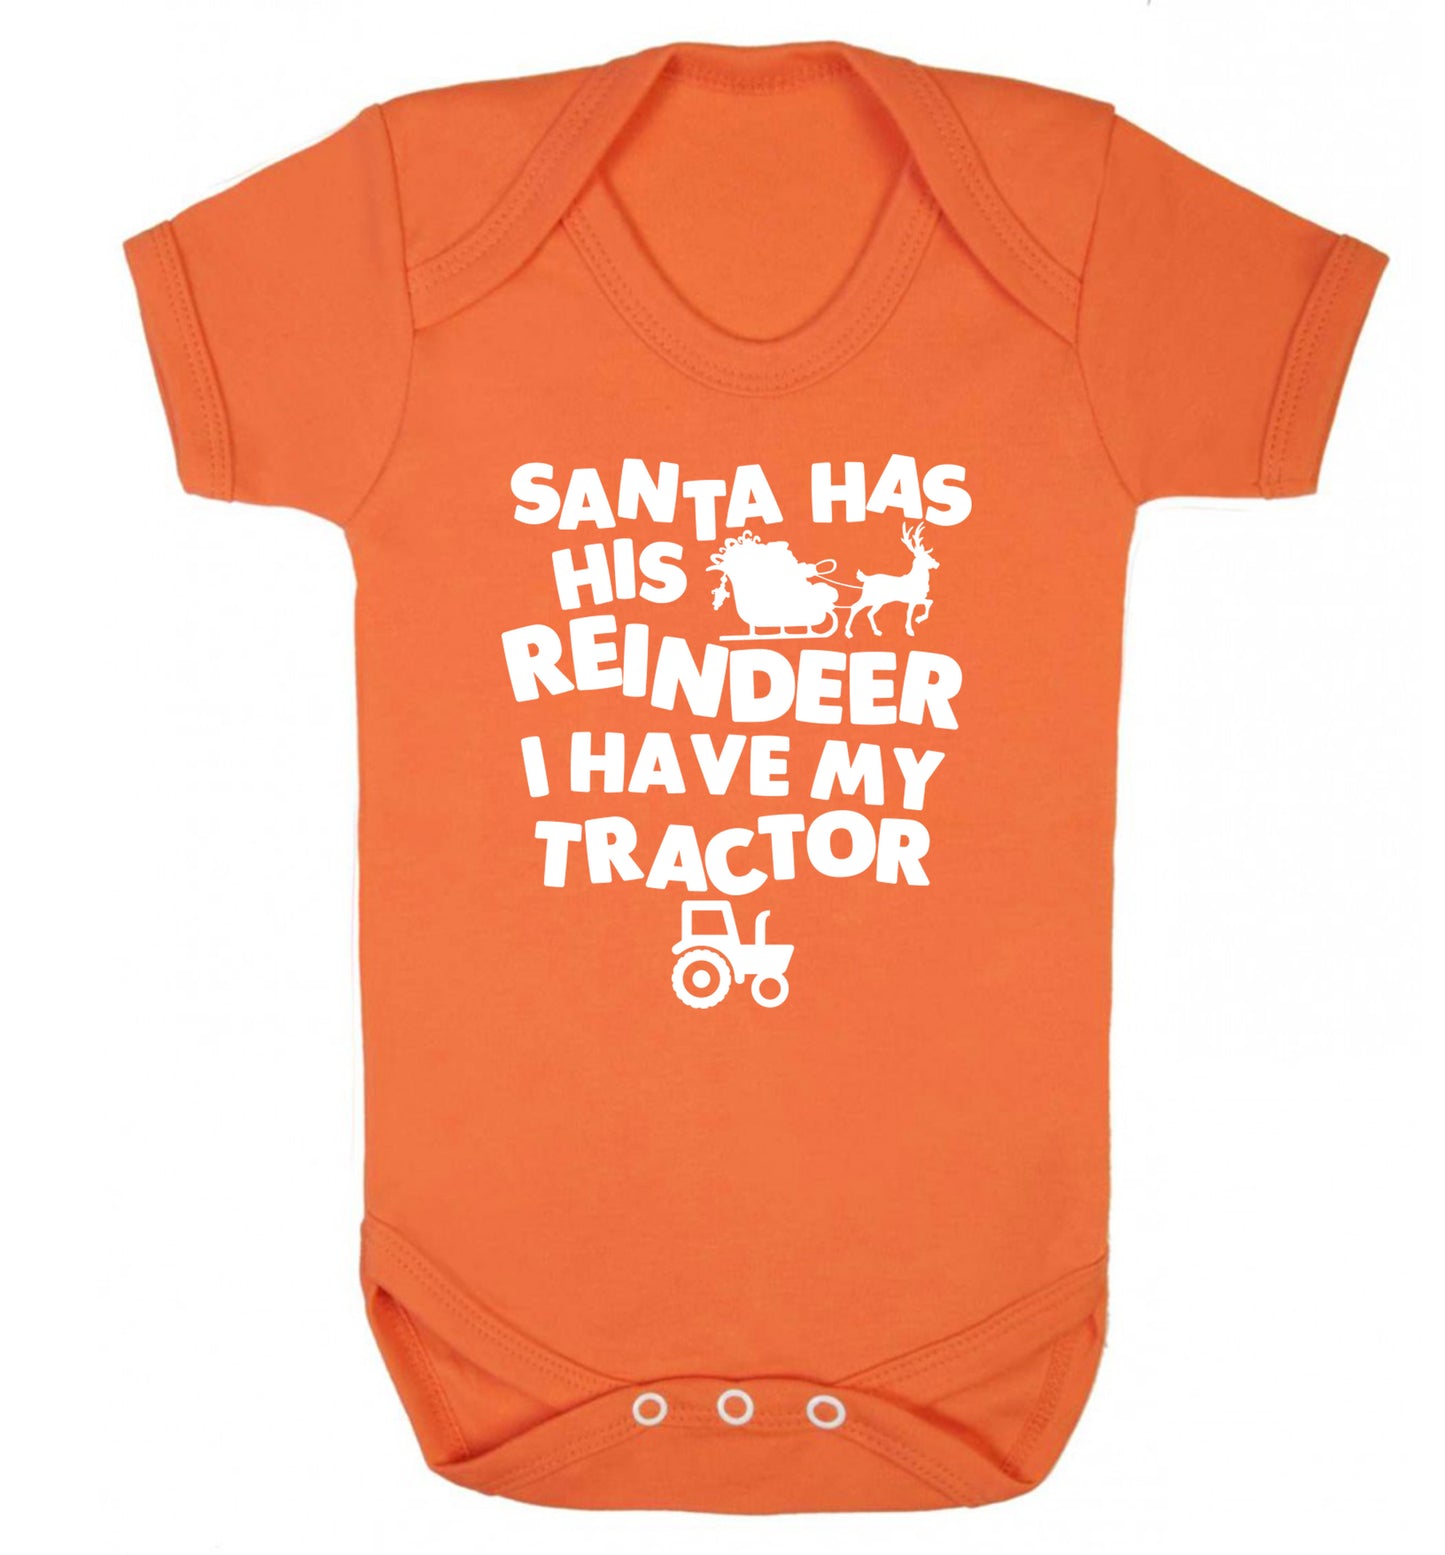 Santa has his reindeer I have my tractor Baby Vest orange 18-24 months